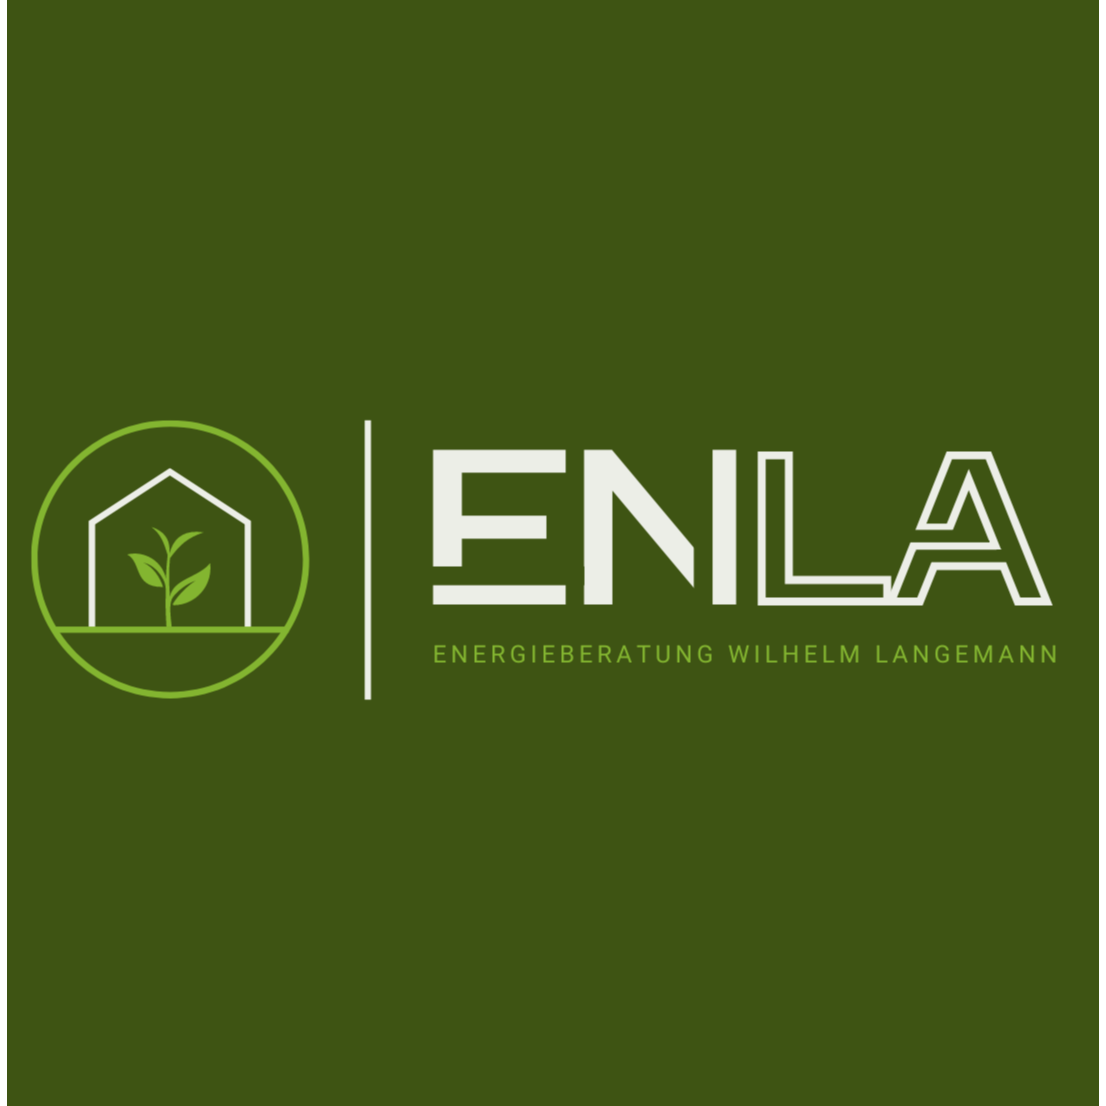 ENLA - Energieberatung Langemann in Leopoldshöhe - Logo